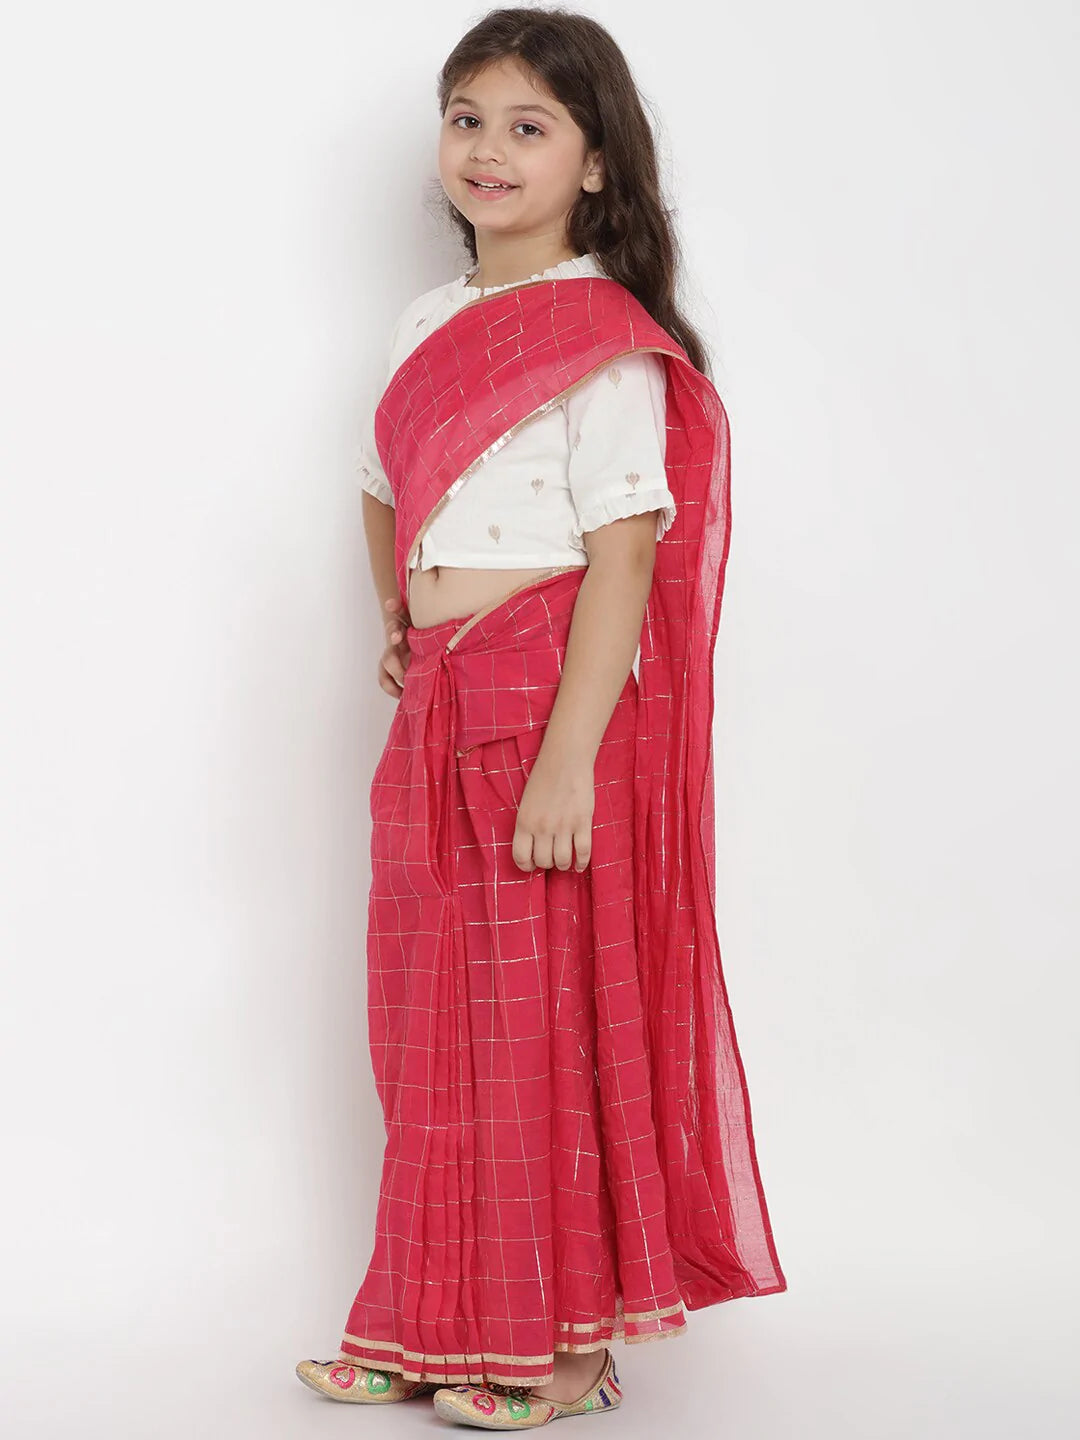 Teenage Girls in Half Sarees - Saree Blouse Patterns